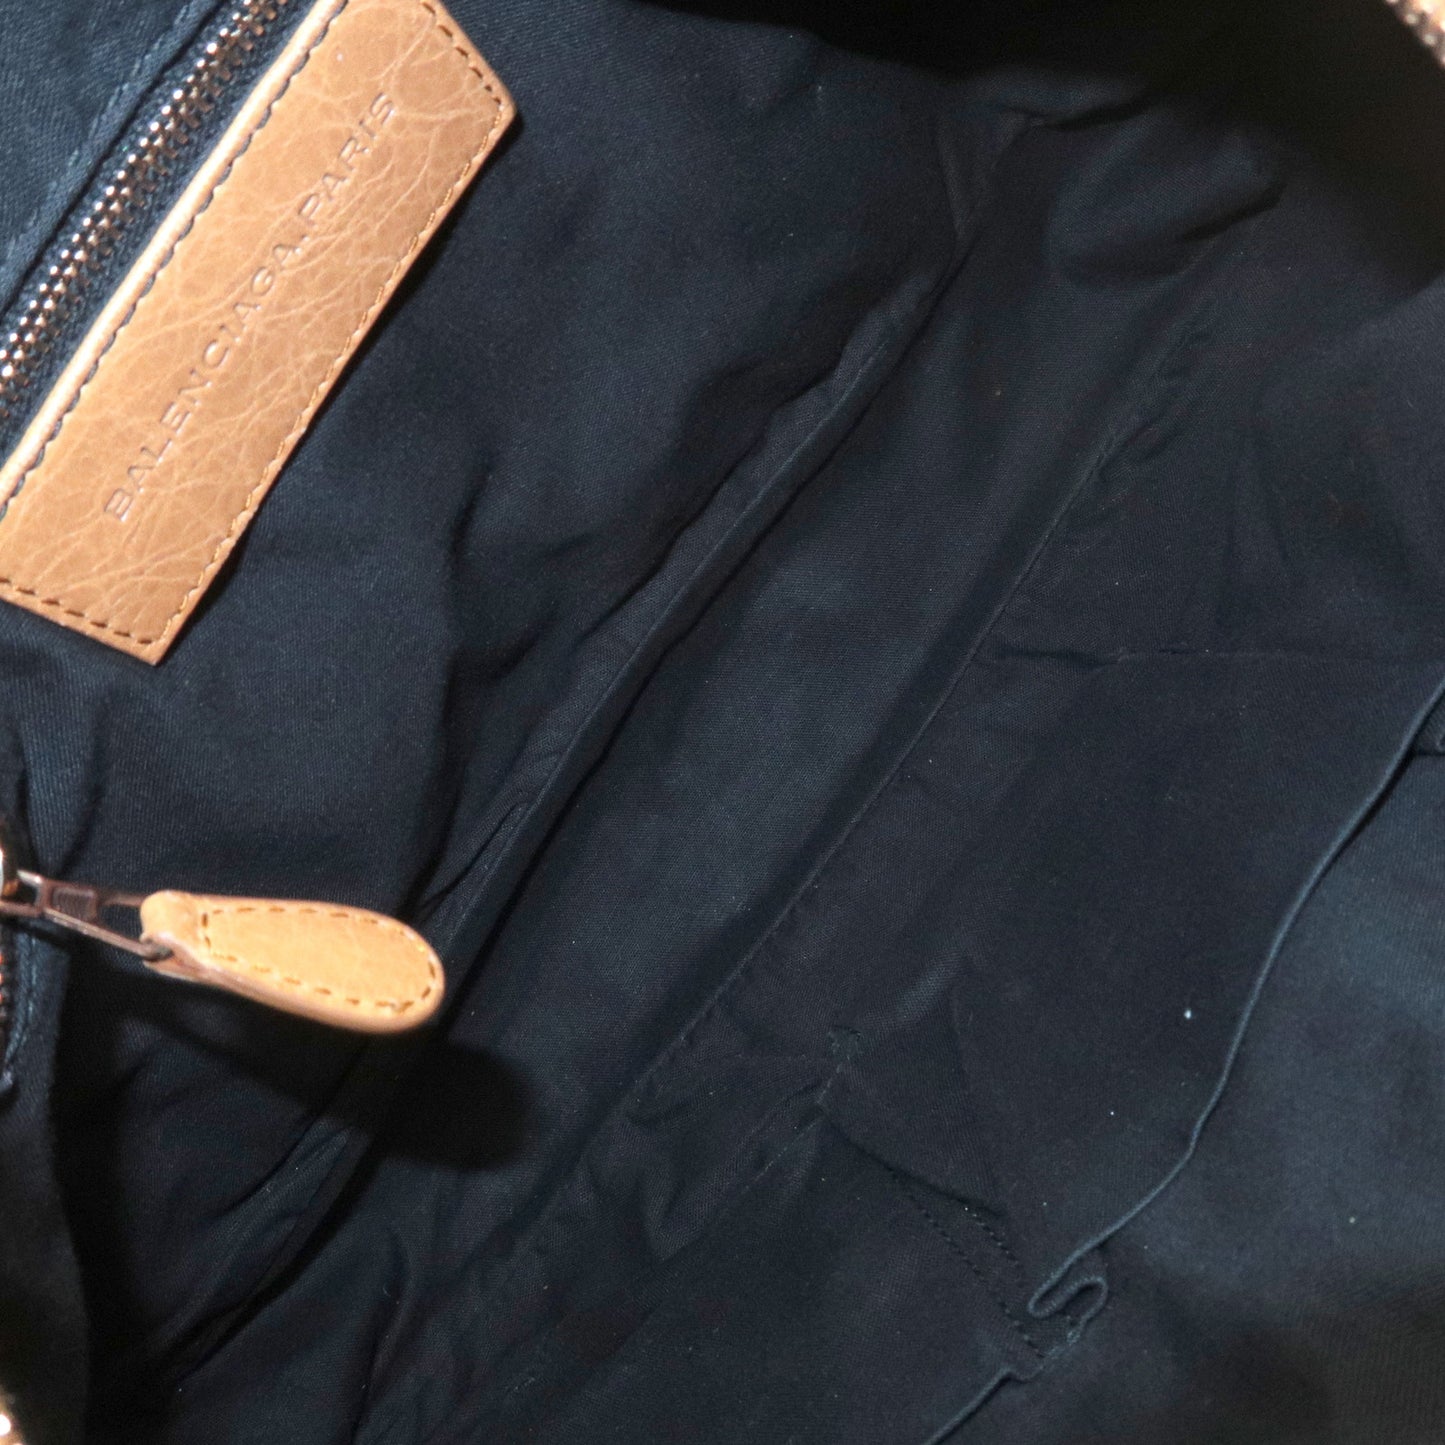 BALENCIAGA The Giant Town Leather 2Way Hand Bag Light Brown 285434